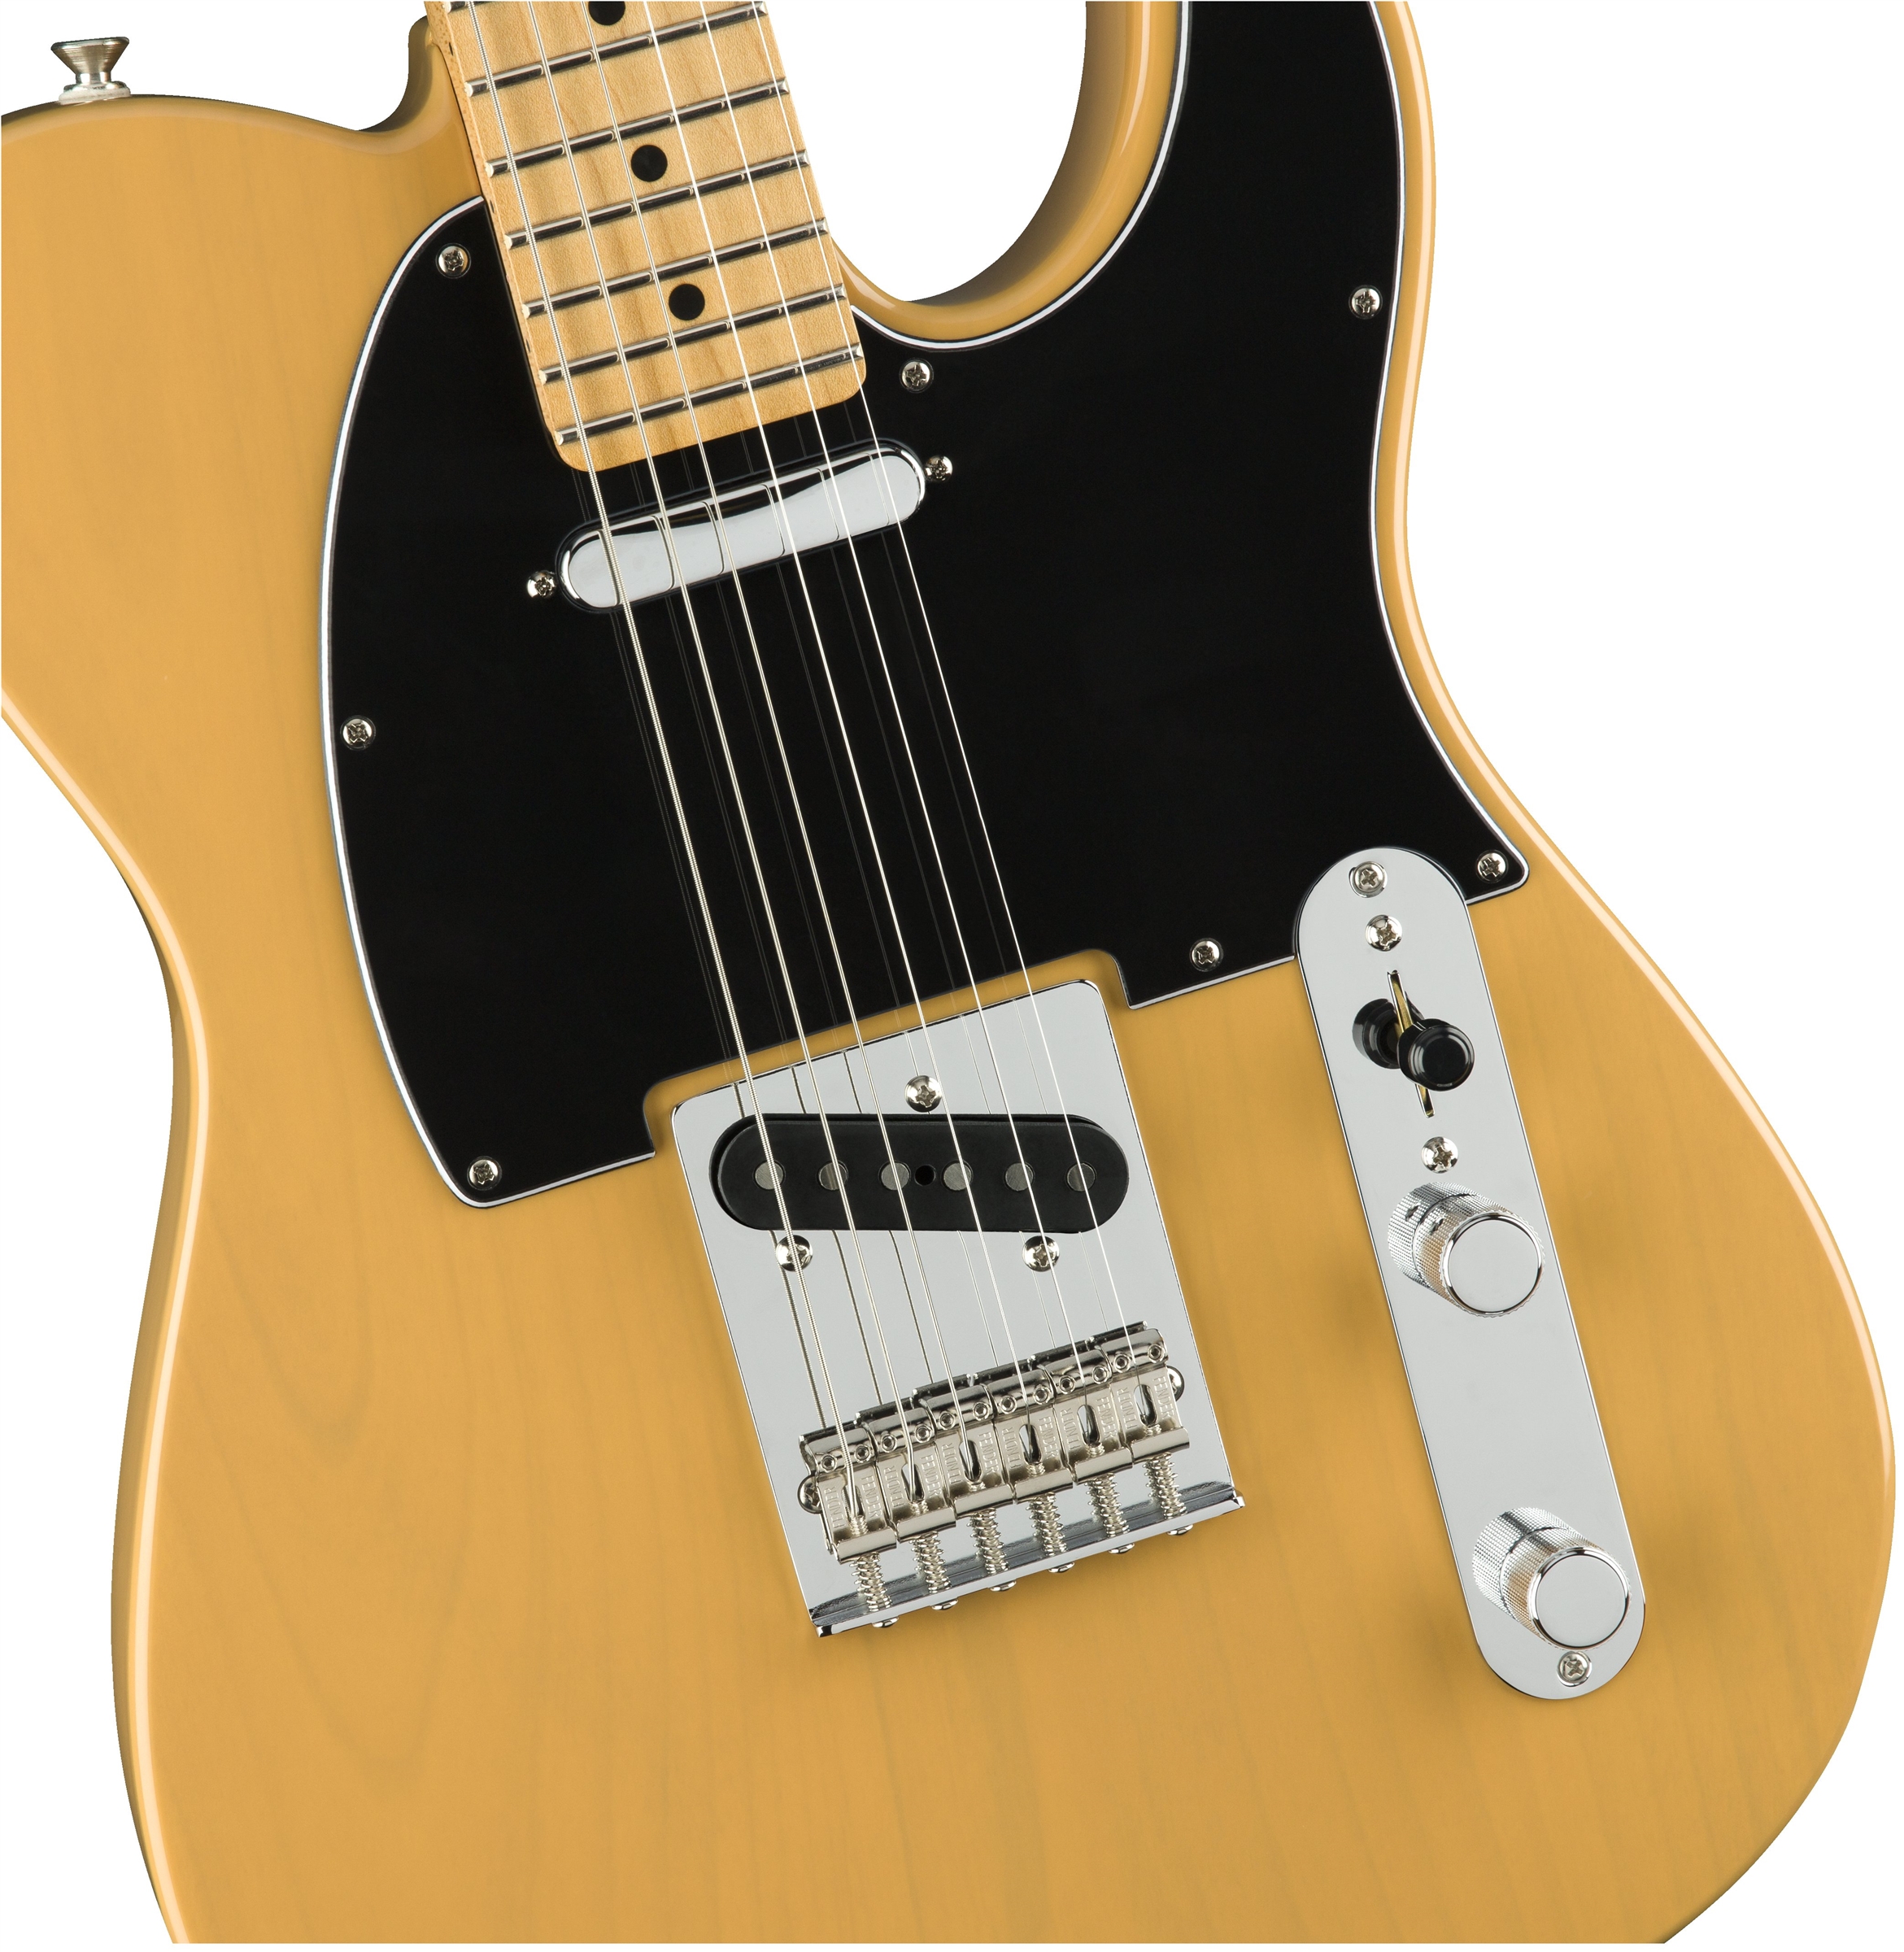 Fender Tele Player Mex Mn - Butterscotch Blonde - Guitarra eléctrica con forma de tel - Variation 3